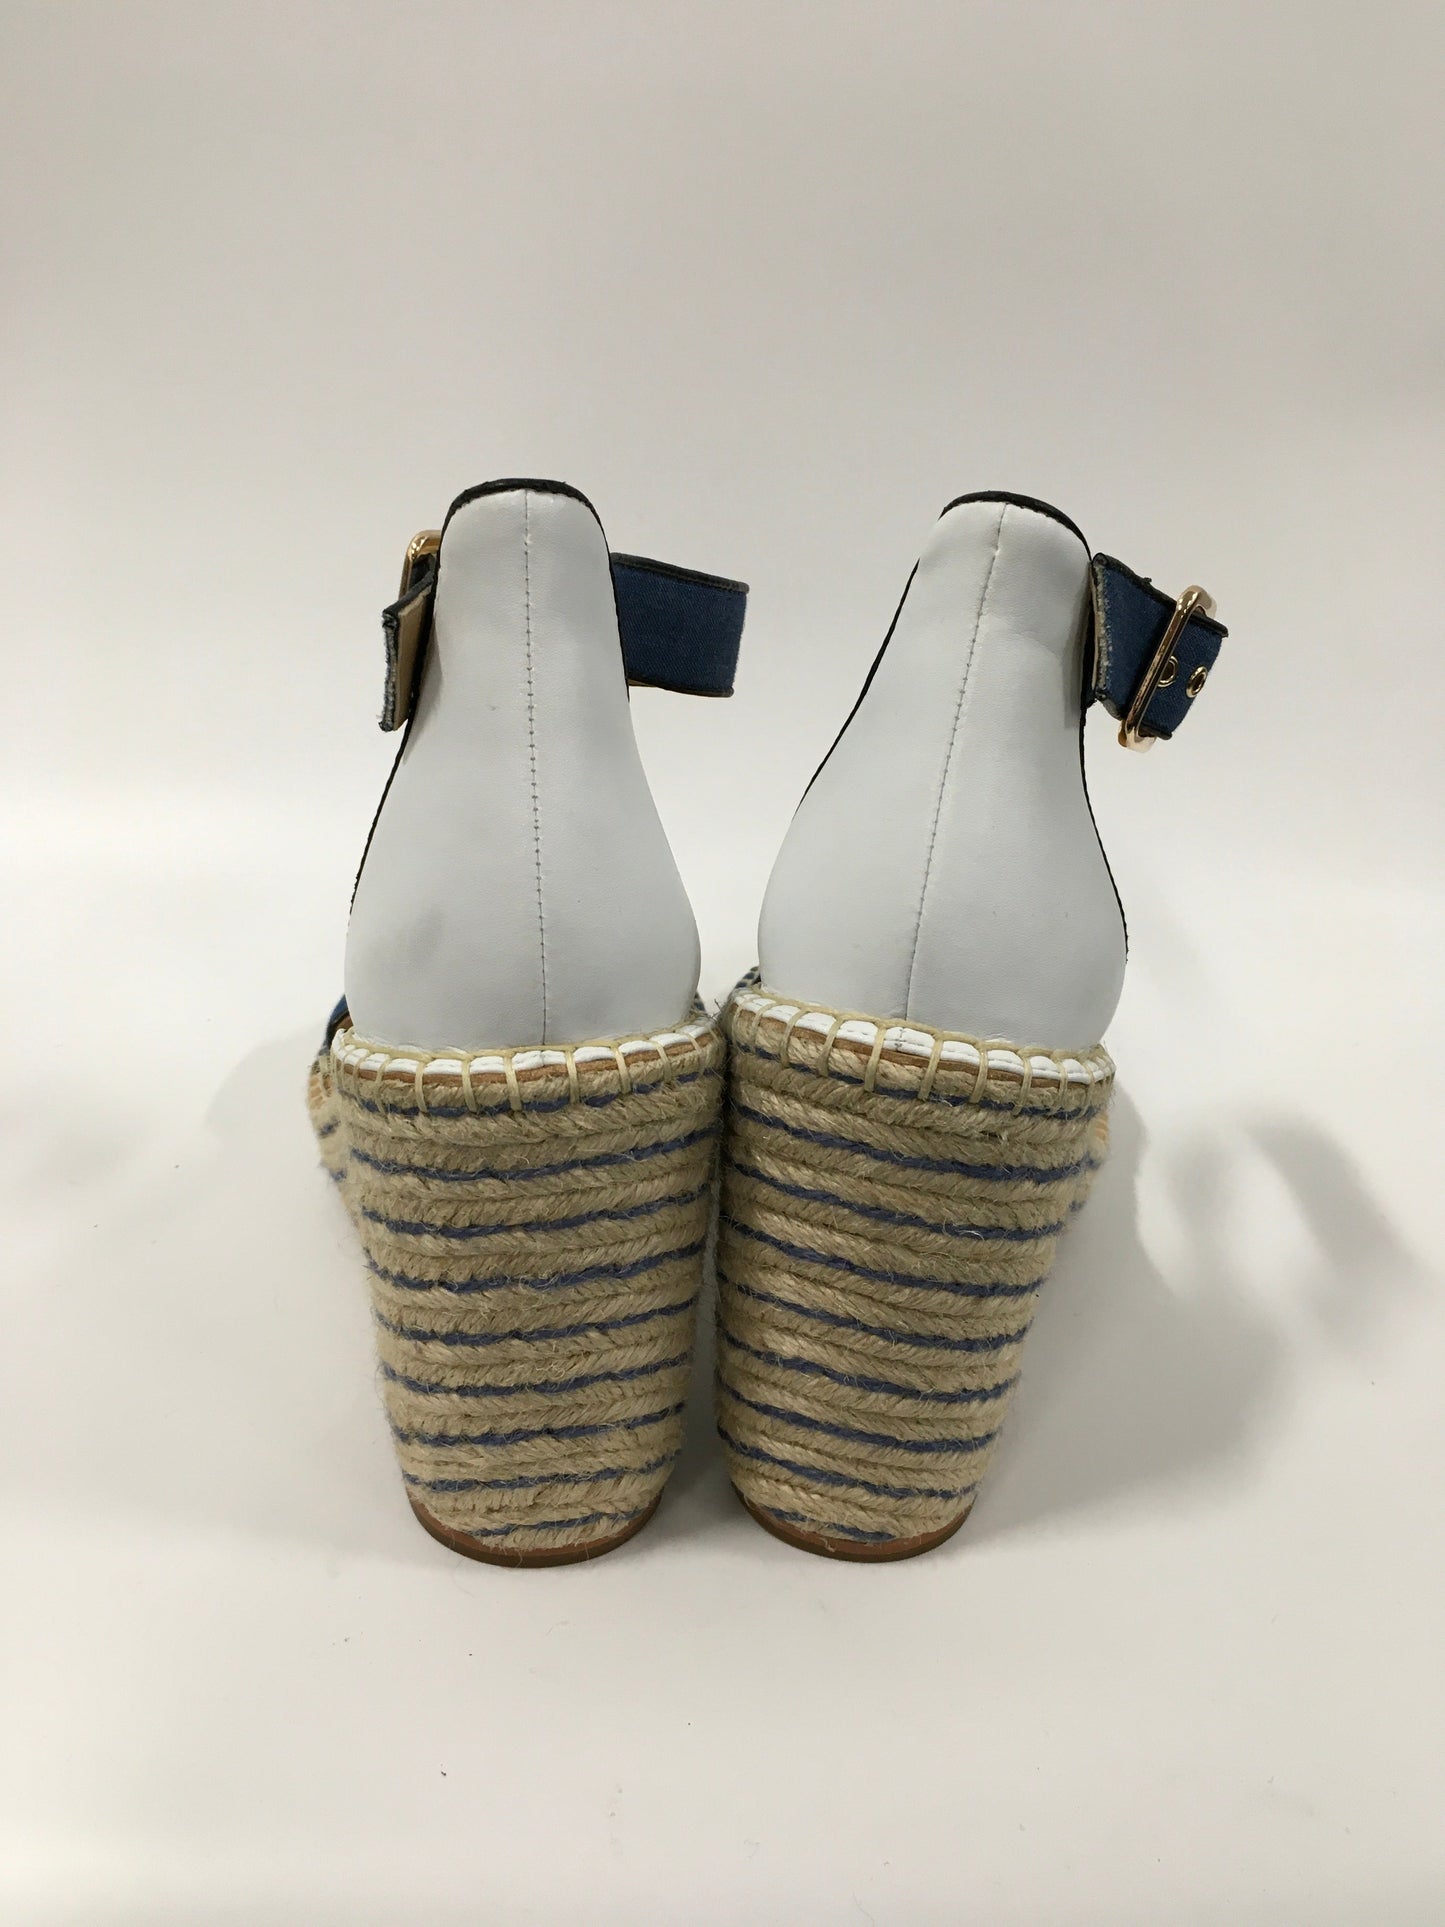 Blue Sandals Heels Wedge Cabi, Size 9